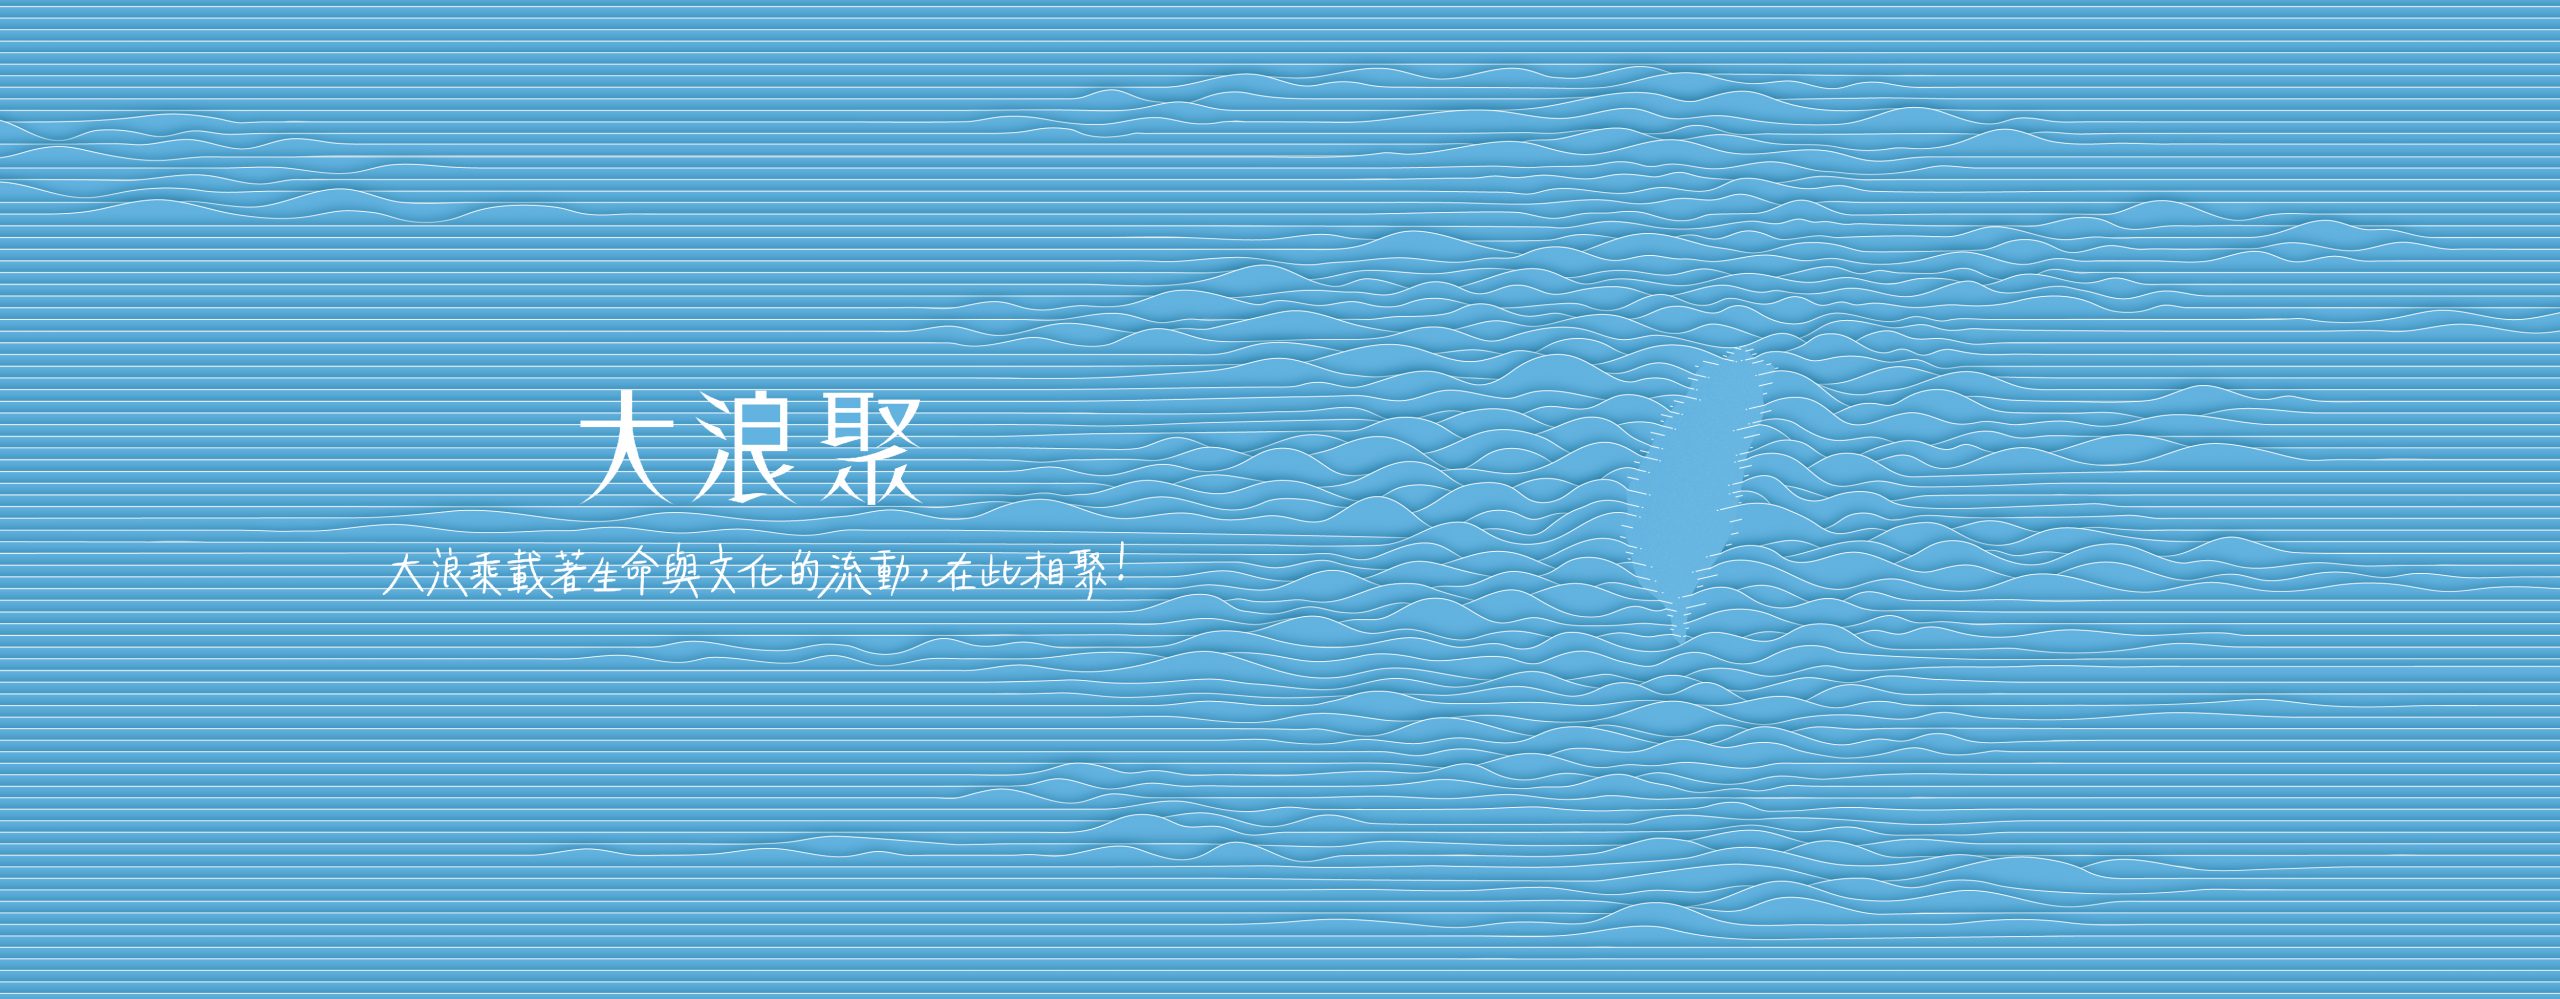 banner(列印)YT+周圍波浪-2-03